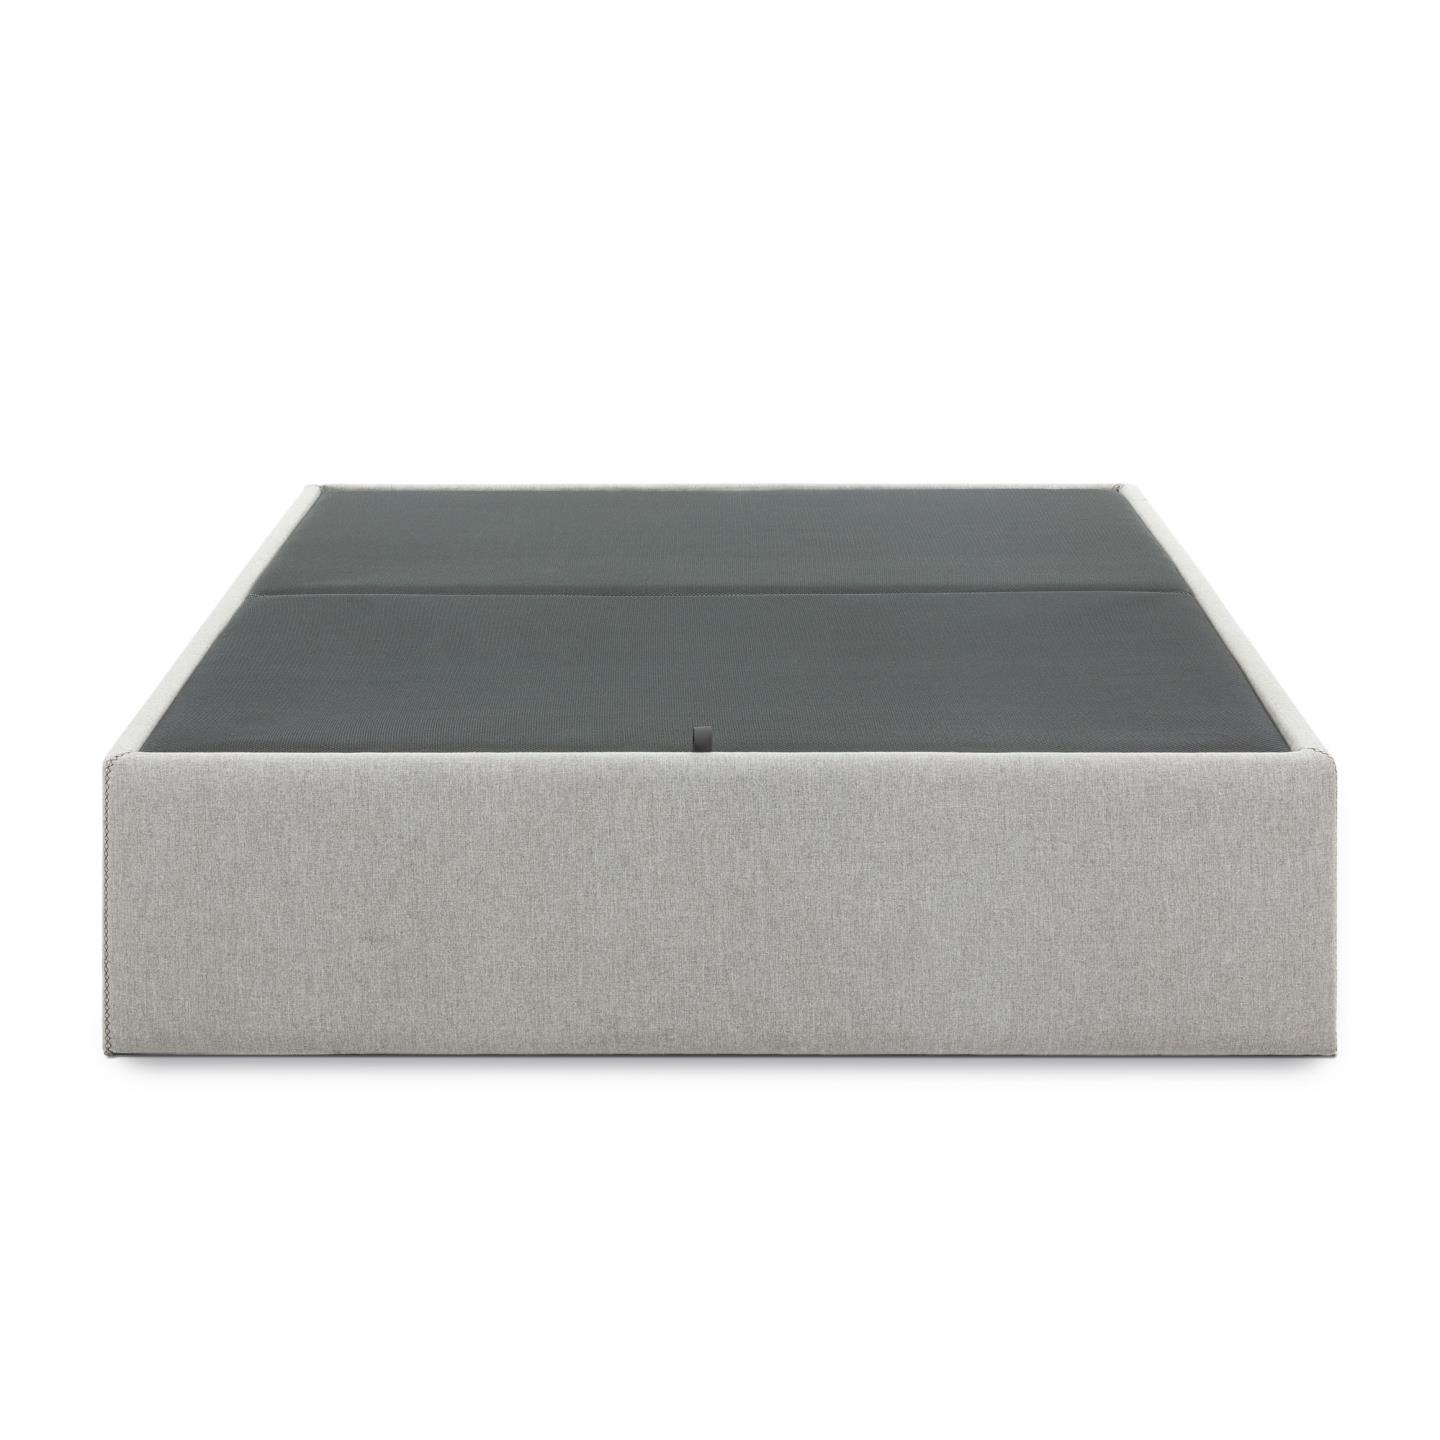 LAFORMA Matters foldesofa, m. opbevaring - grå stof (til en 150x190 cm madras)